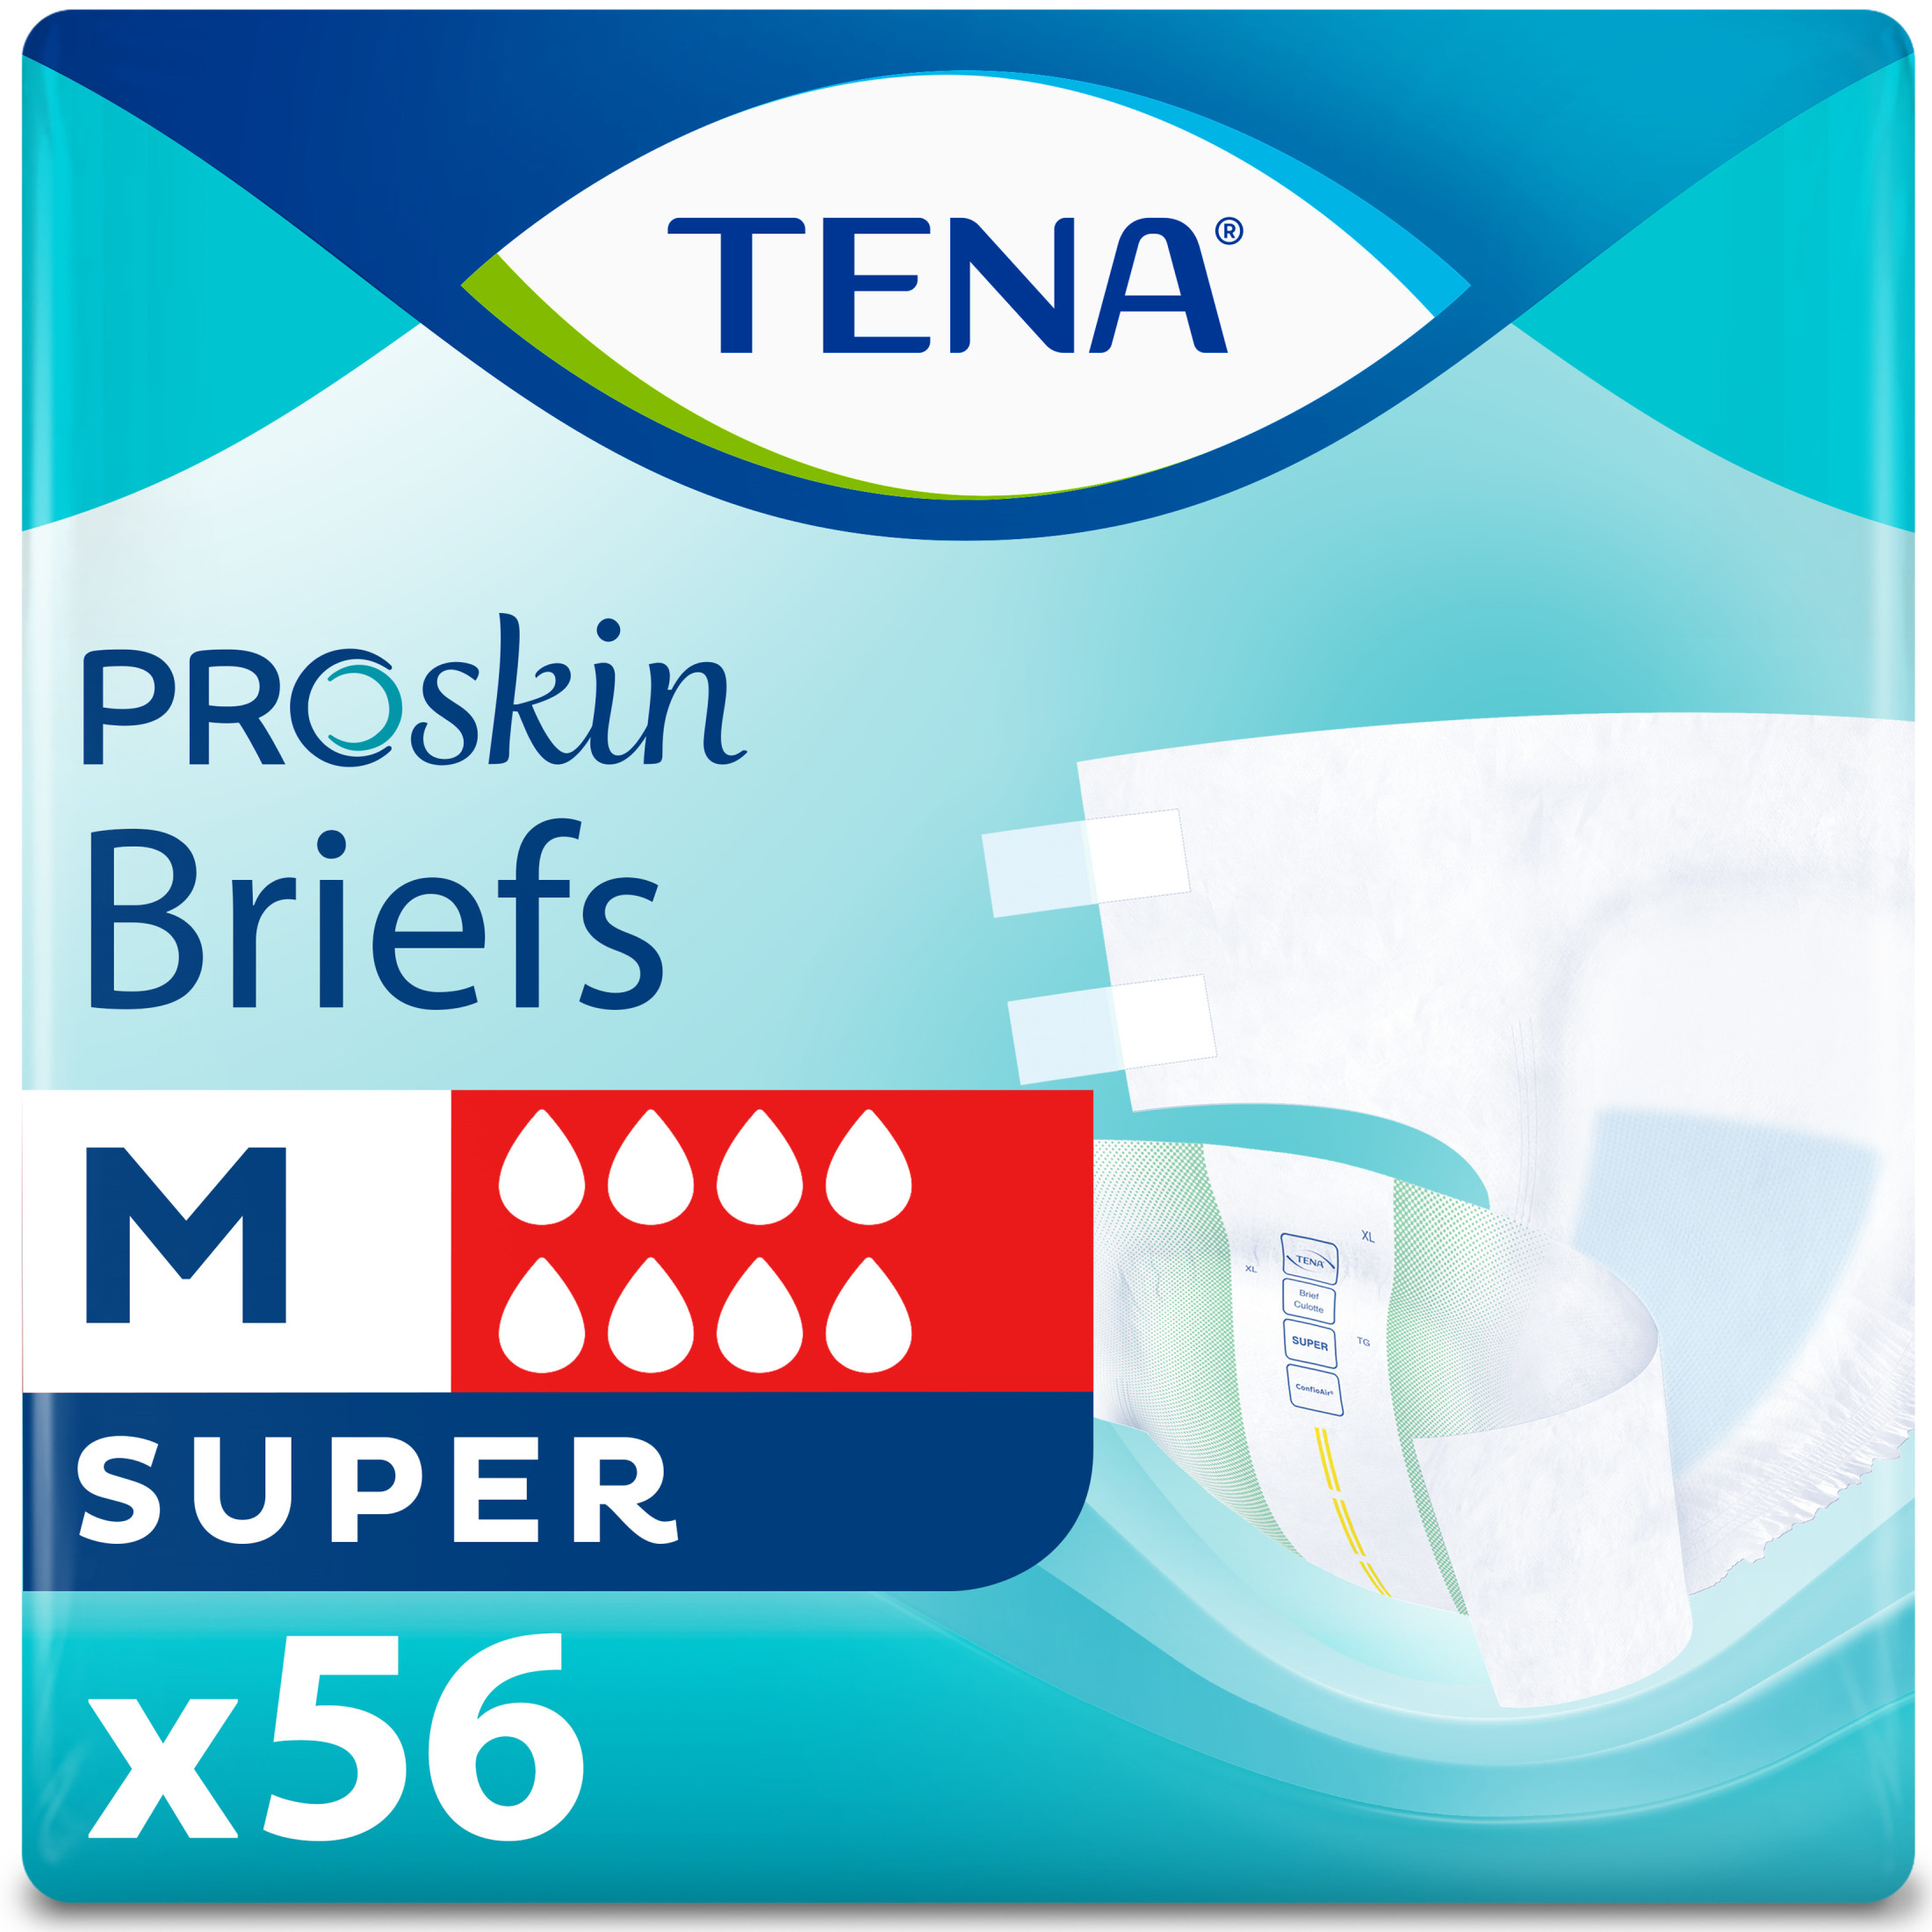 Tena ProSkin Unisex Adult Diapers, Maximum Absorbency, Medium, 56 Ct - image 1 of 6